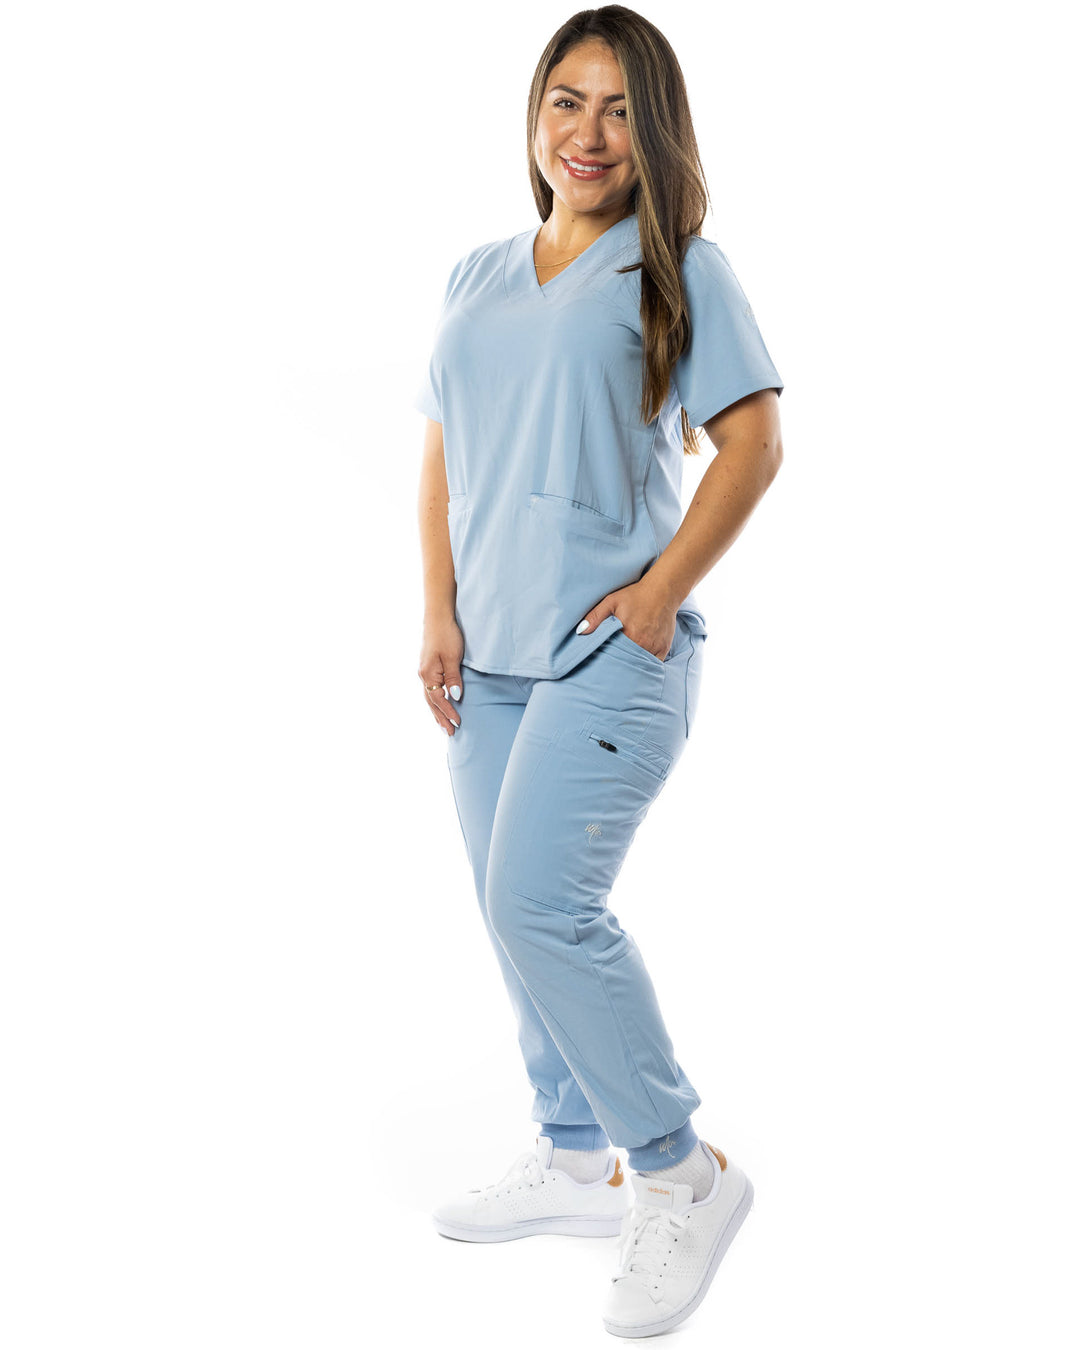 Women's Slate Blue 2 Pocket Scrub Top - Mimscrubs by millennials in Medicine